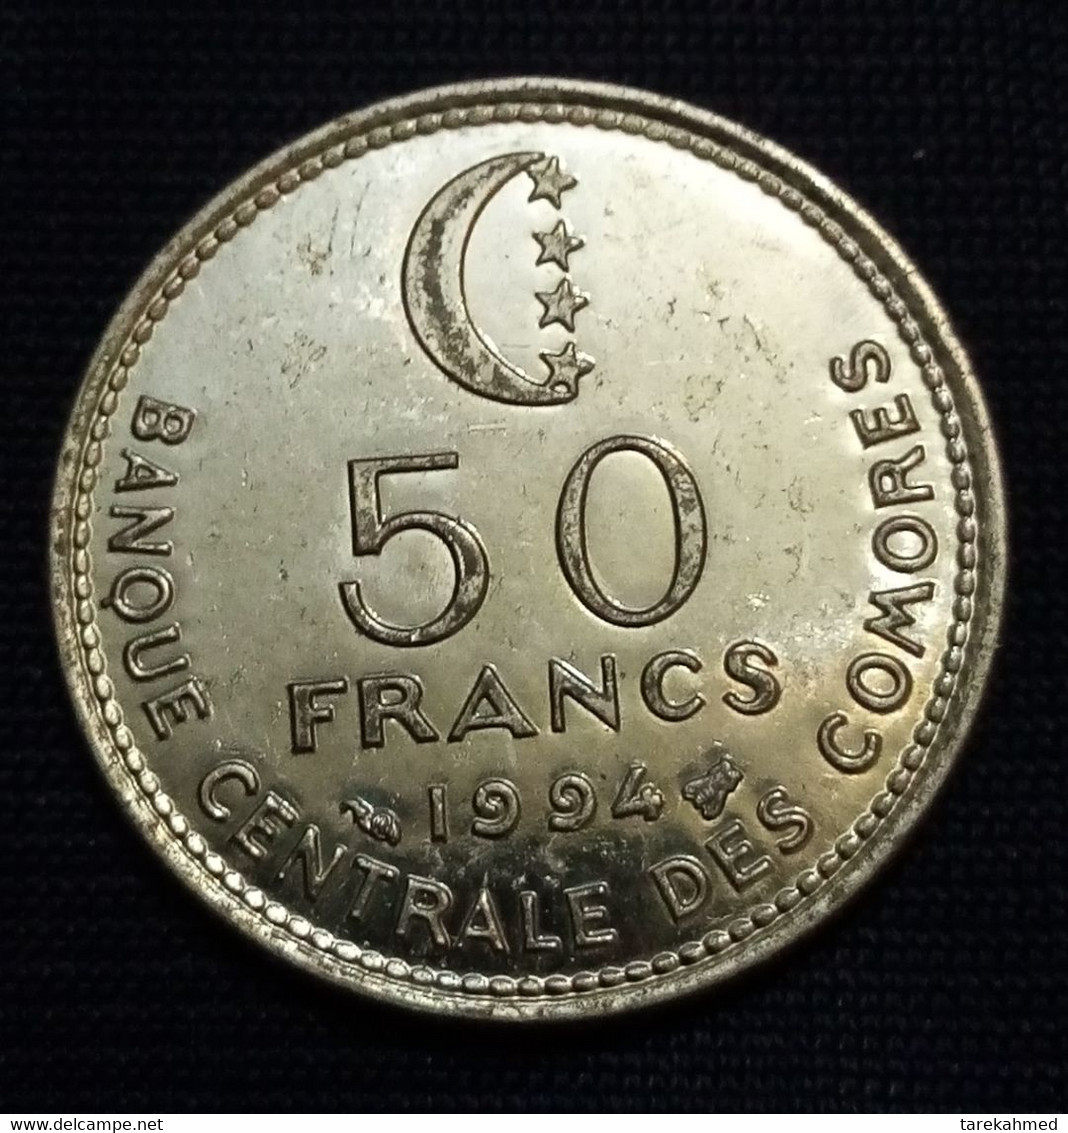 COMOROS, Islamic Republic - 50 Francs - 1994  - KM 16  - UNC , Gomaa - Comoros